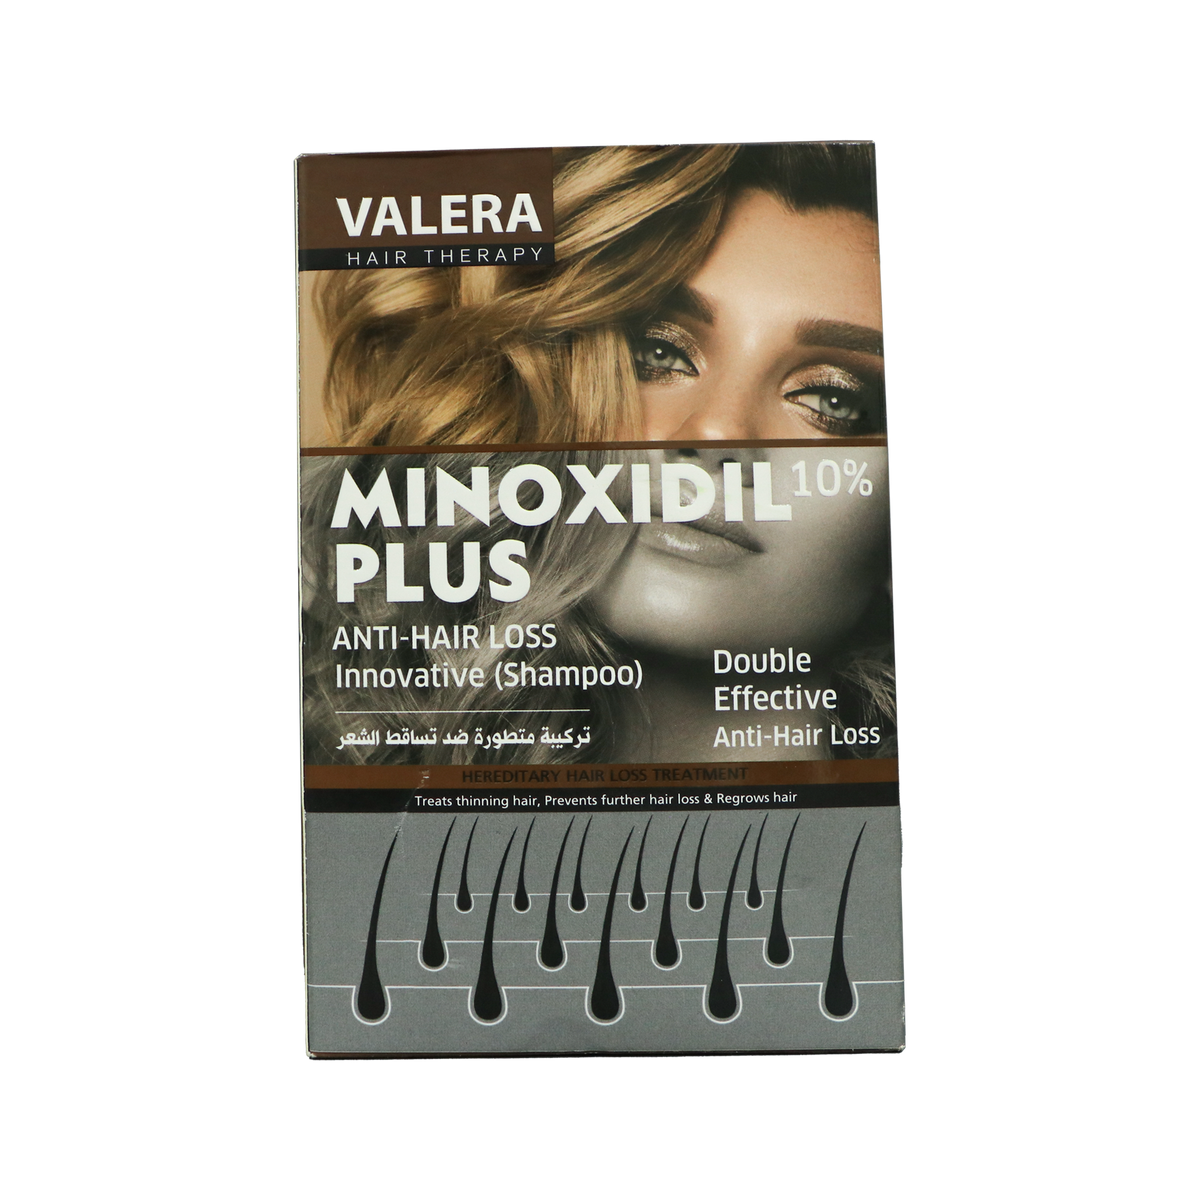 Valera Anti-Hair Loss Innovative (Shampoo) 250ml